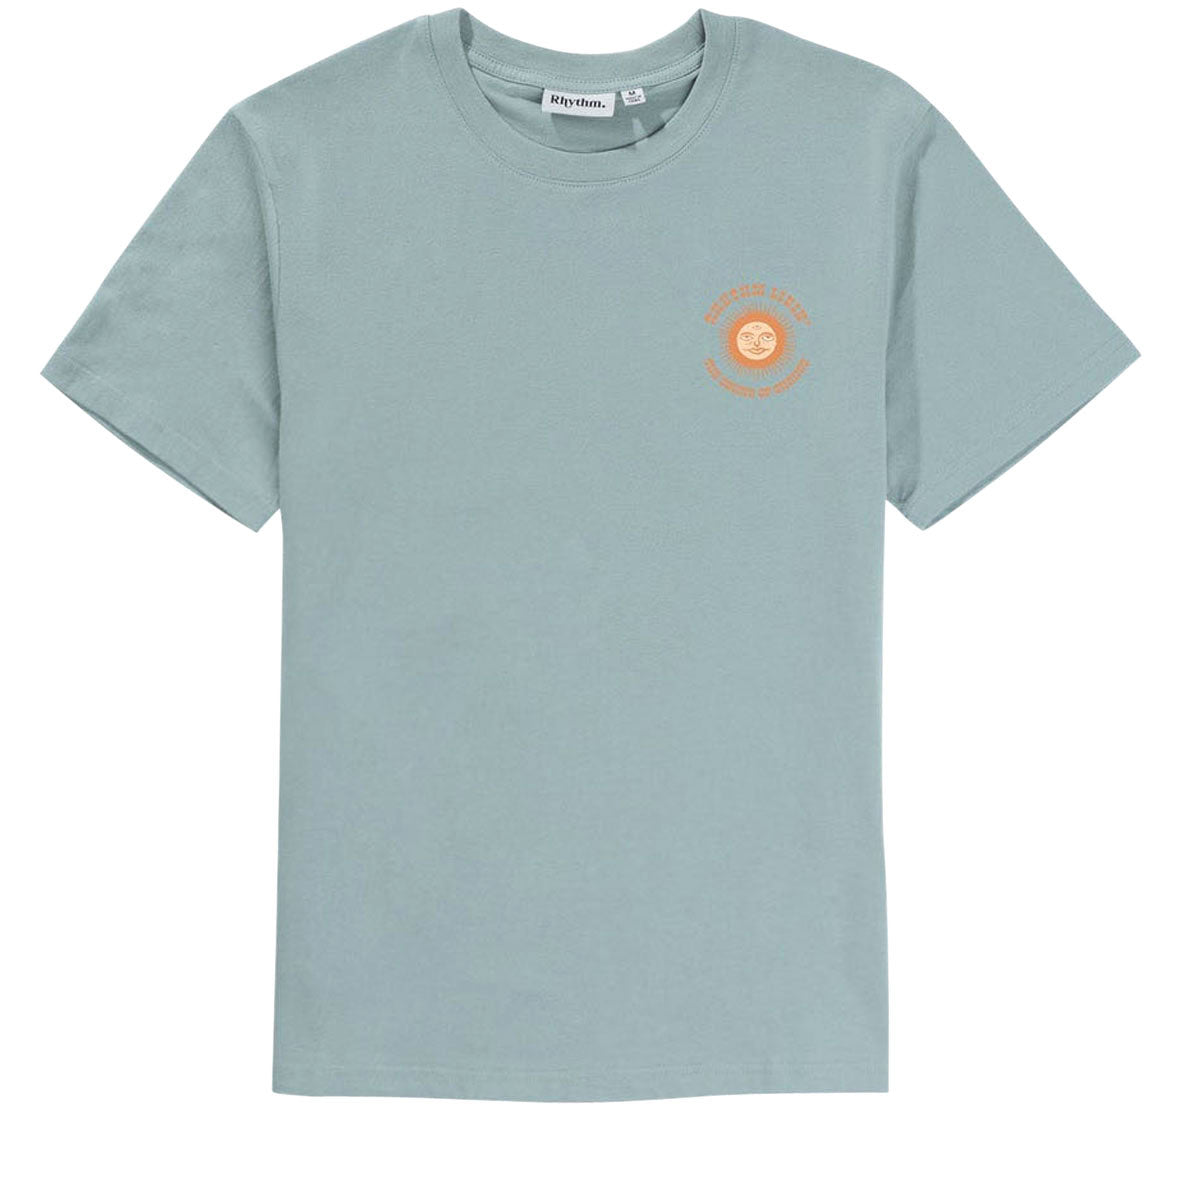 Rhythm Sun Life T-Shirt - Seafoam image 1